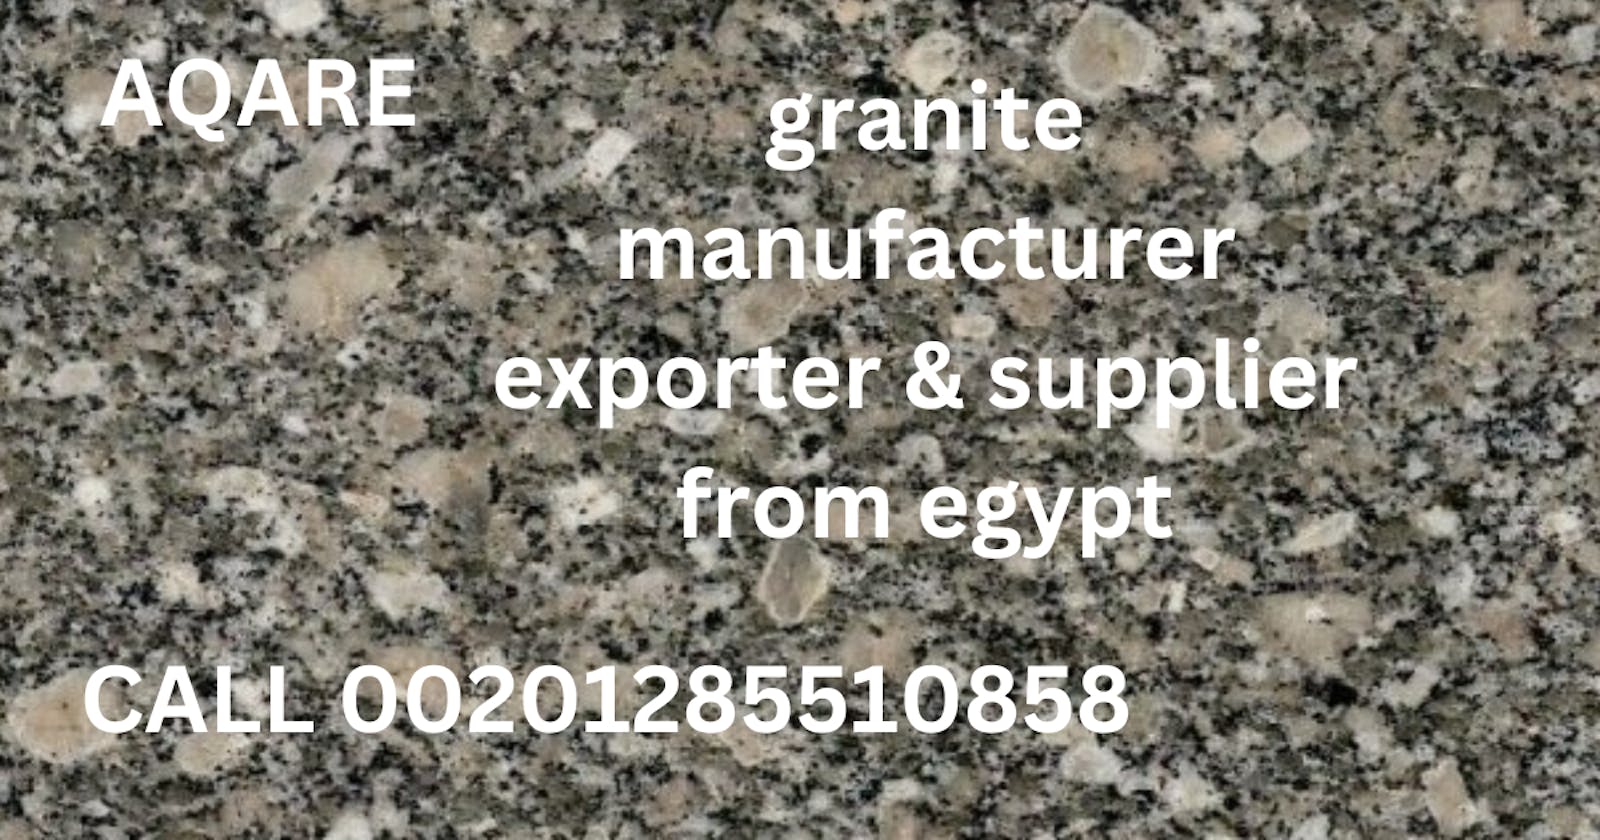 Aqare Granite and Marble Exporter